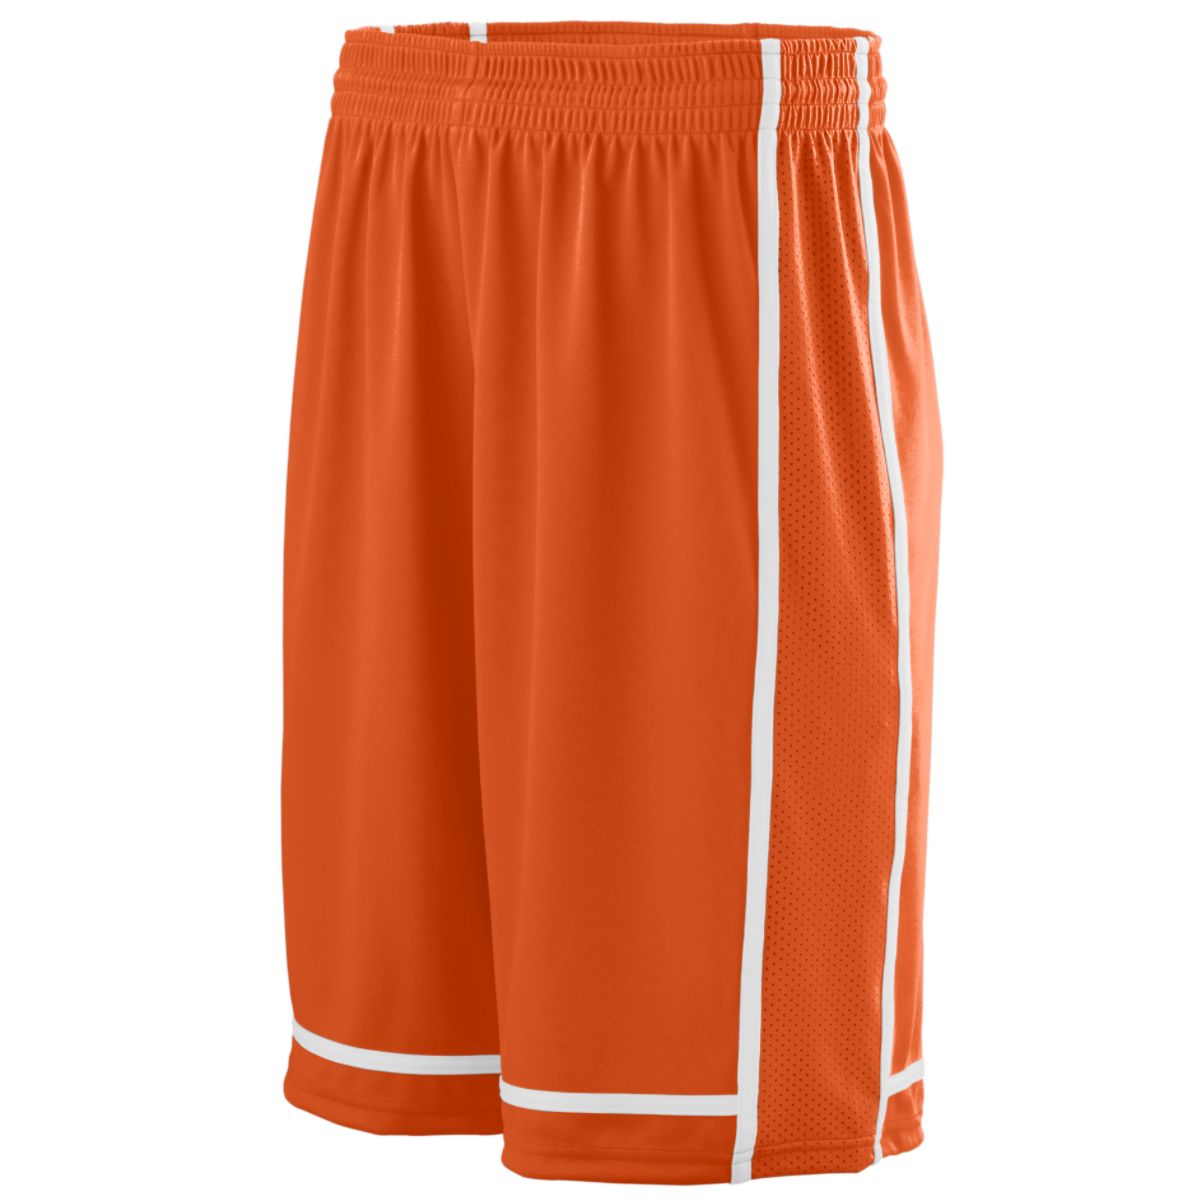 Augusta Winning Streak Shorts 1185 Orange/White 3Xl - image 1 of 2